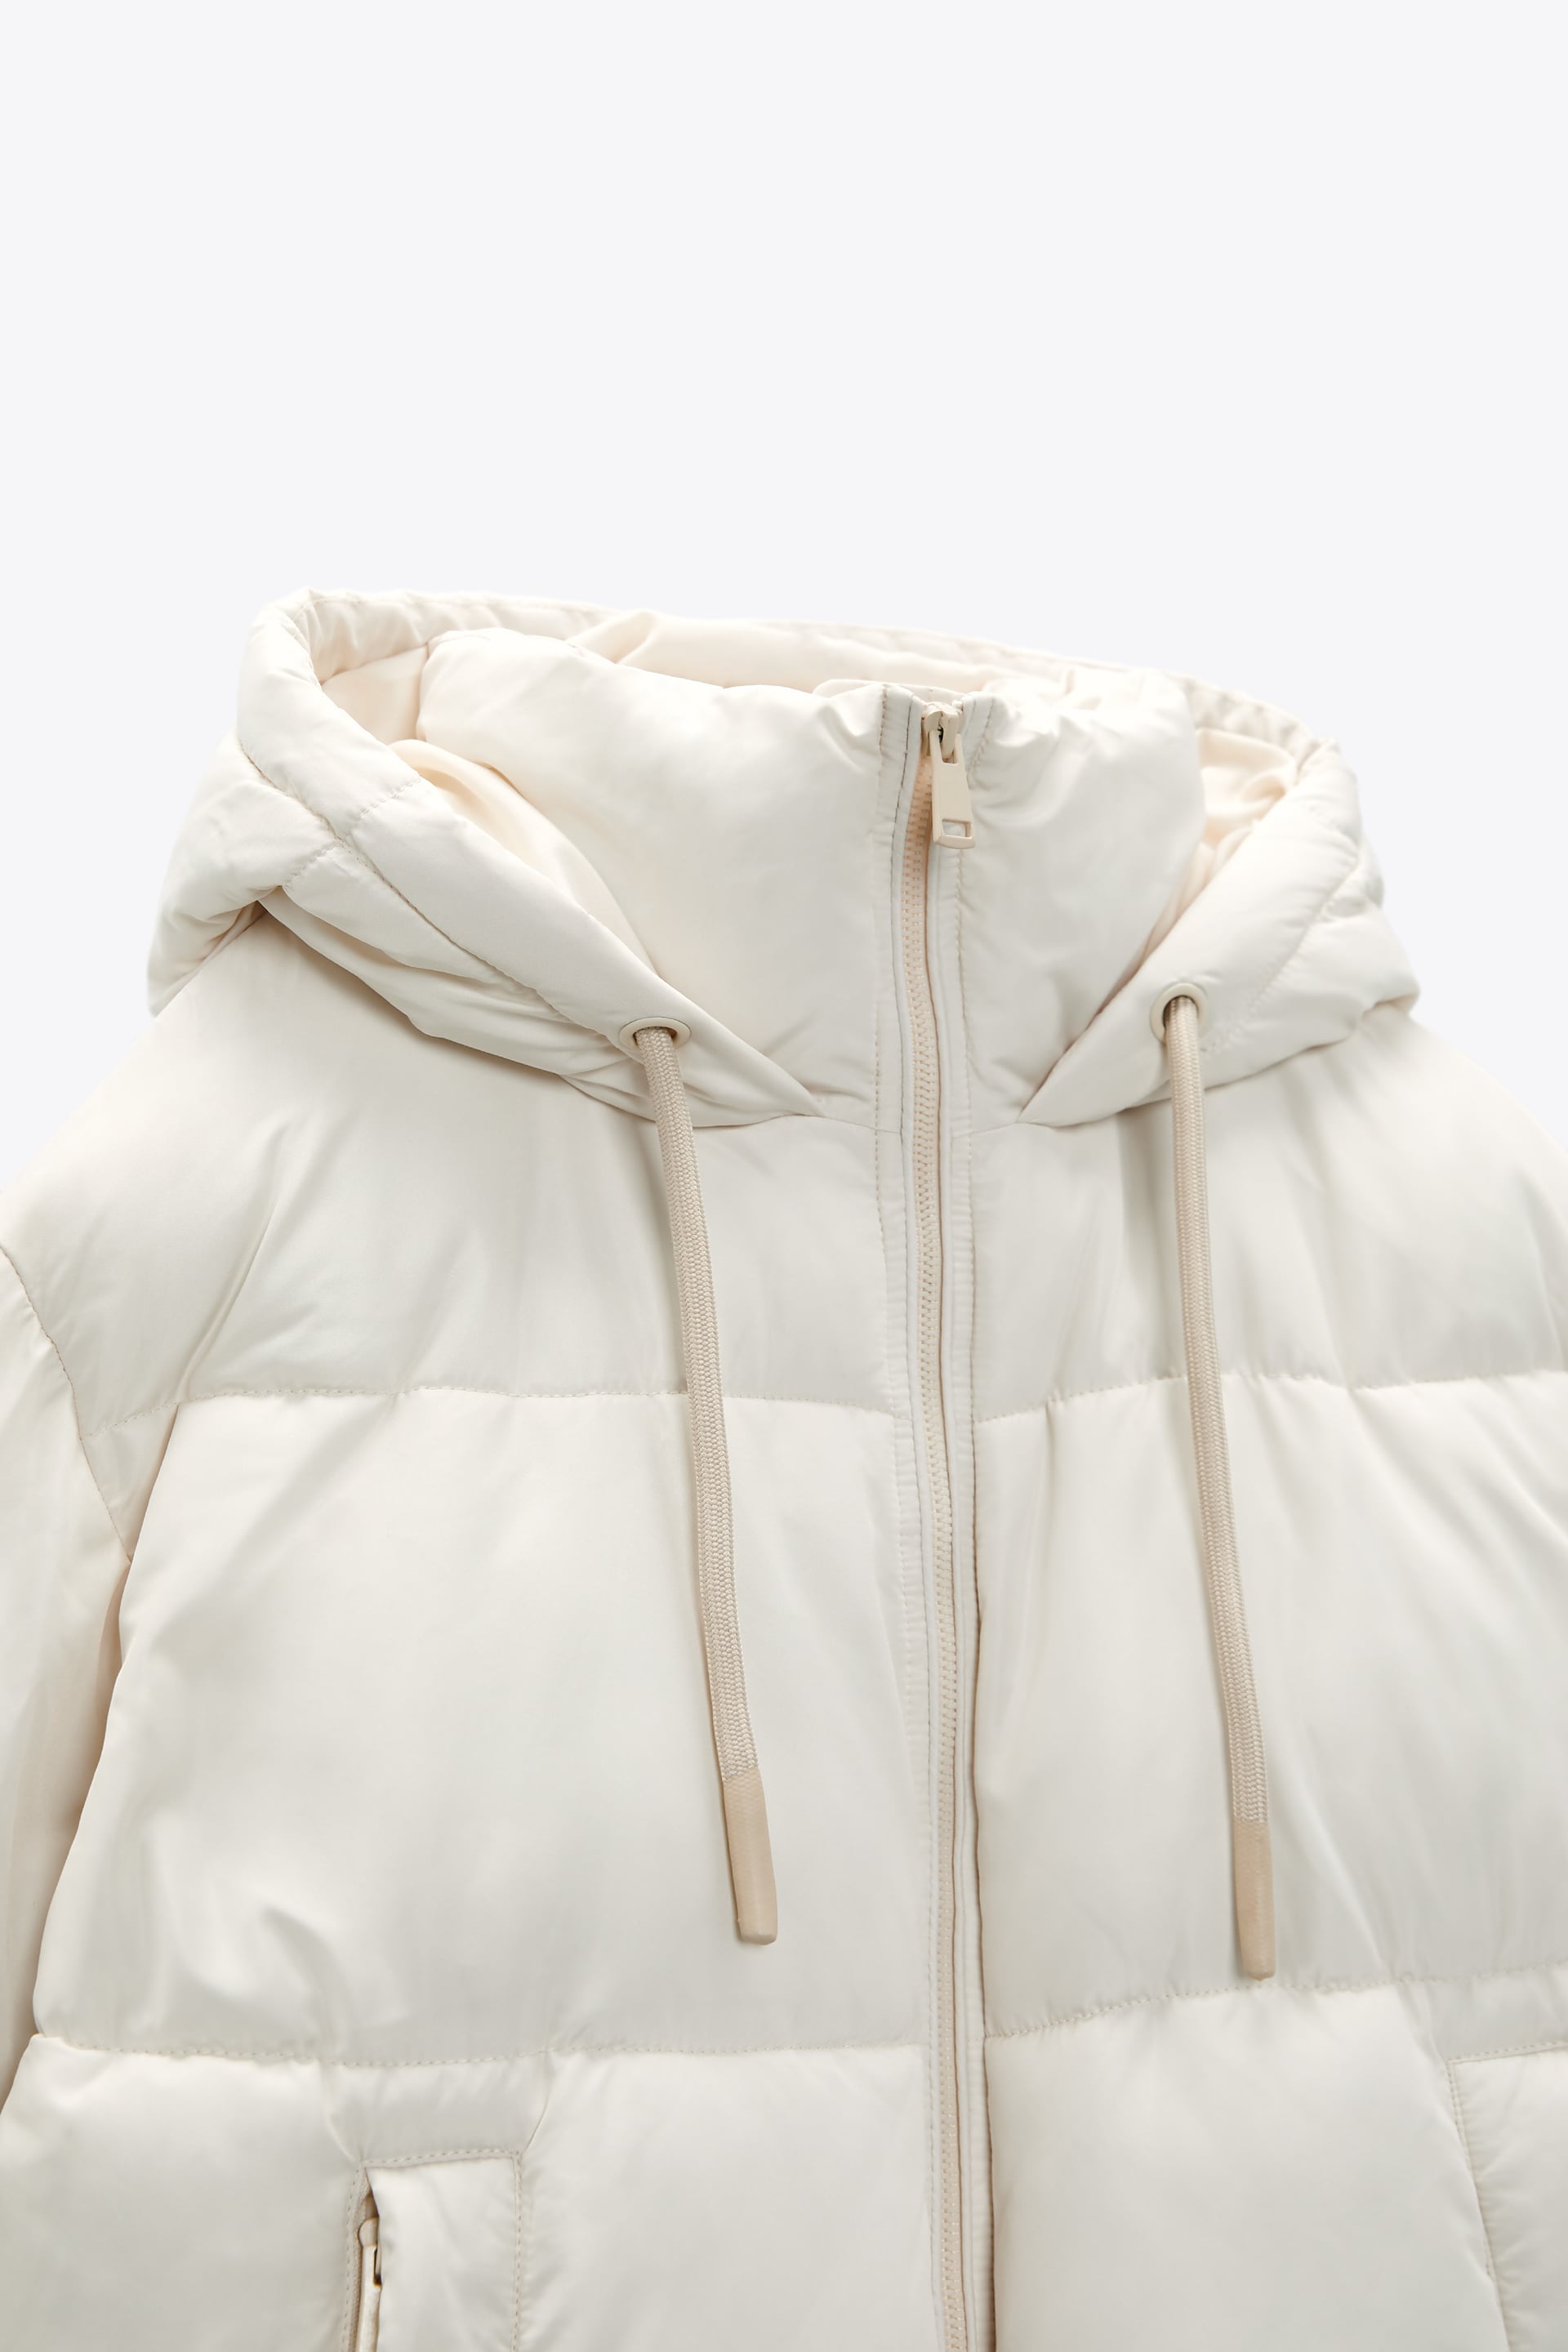 Zara Parka Coat Hooded Water Resistant Size S